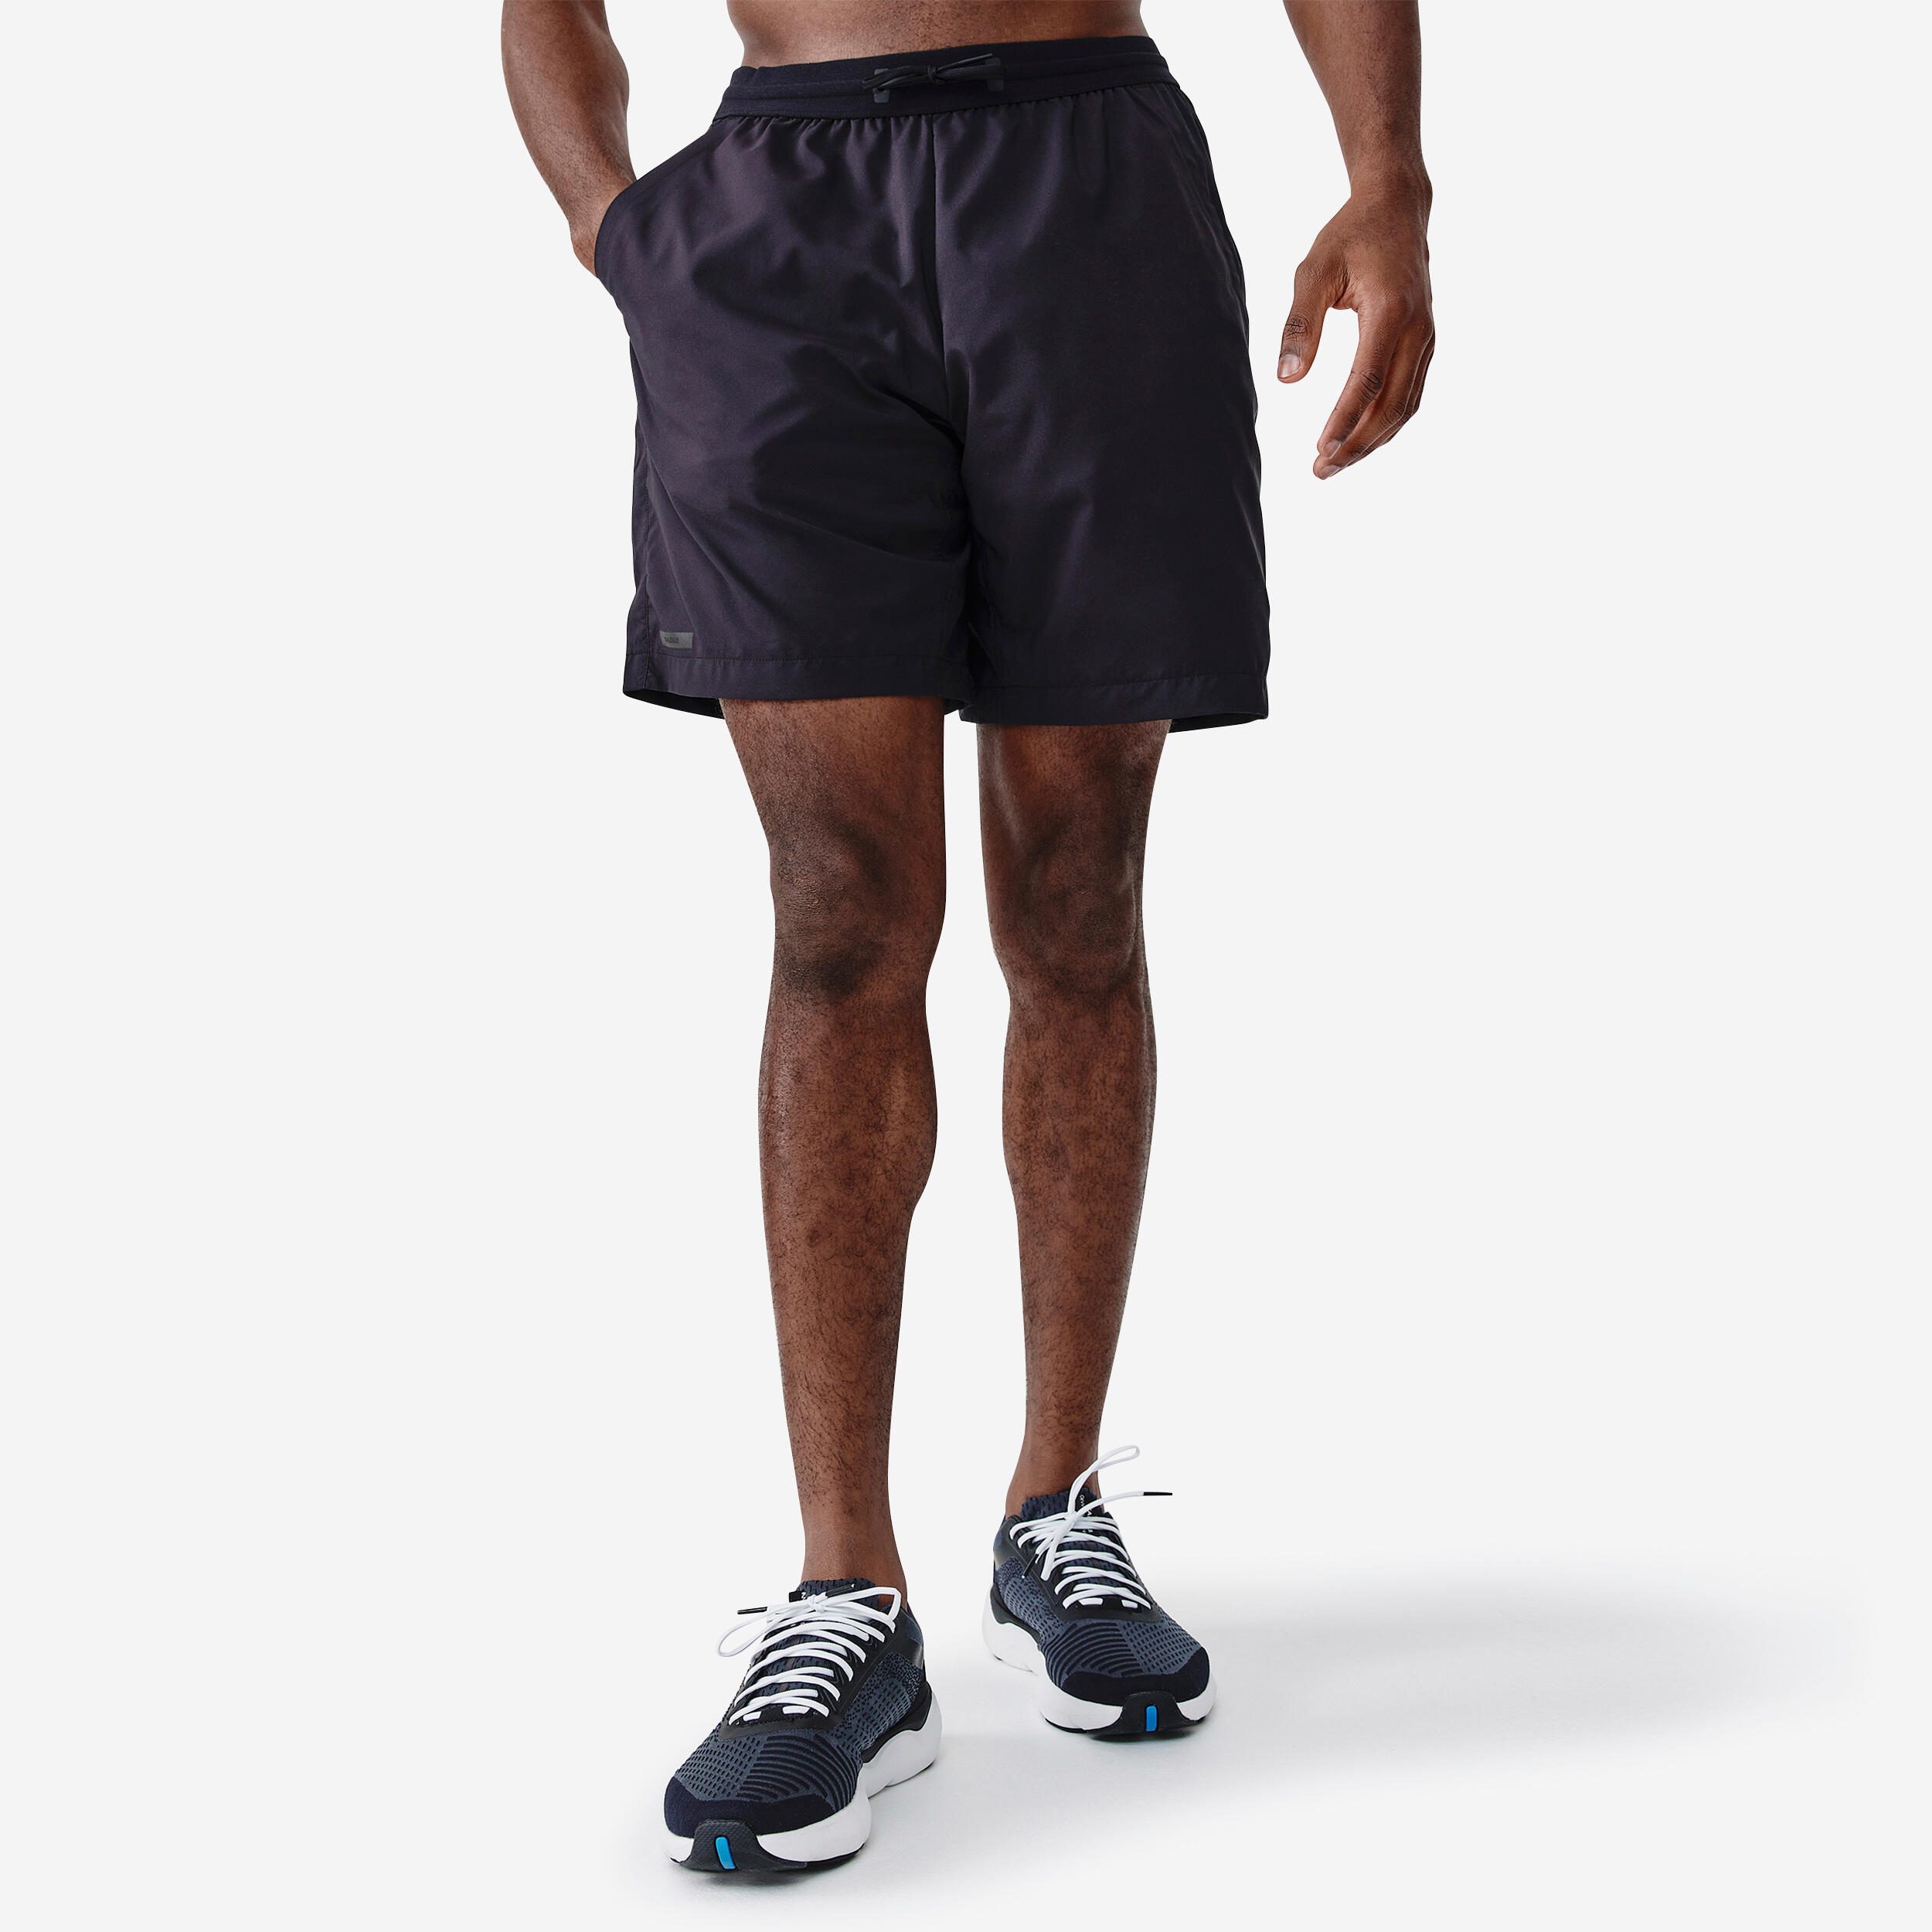 Men's Running Breathable Shorts Dry+ - Black 1/6